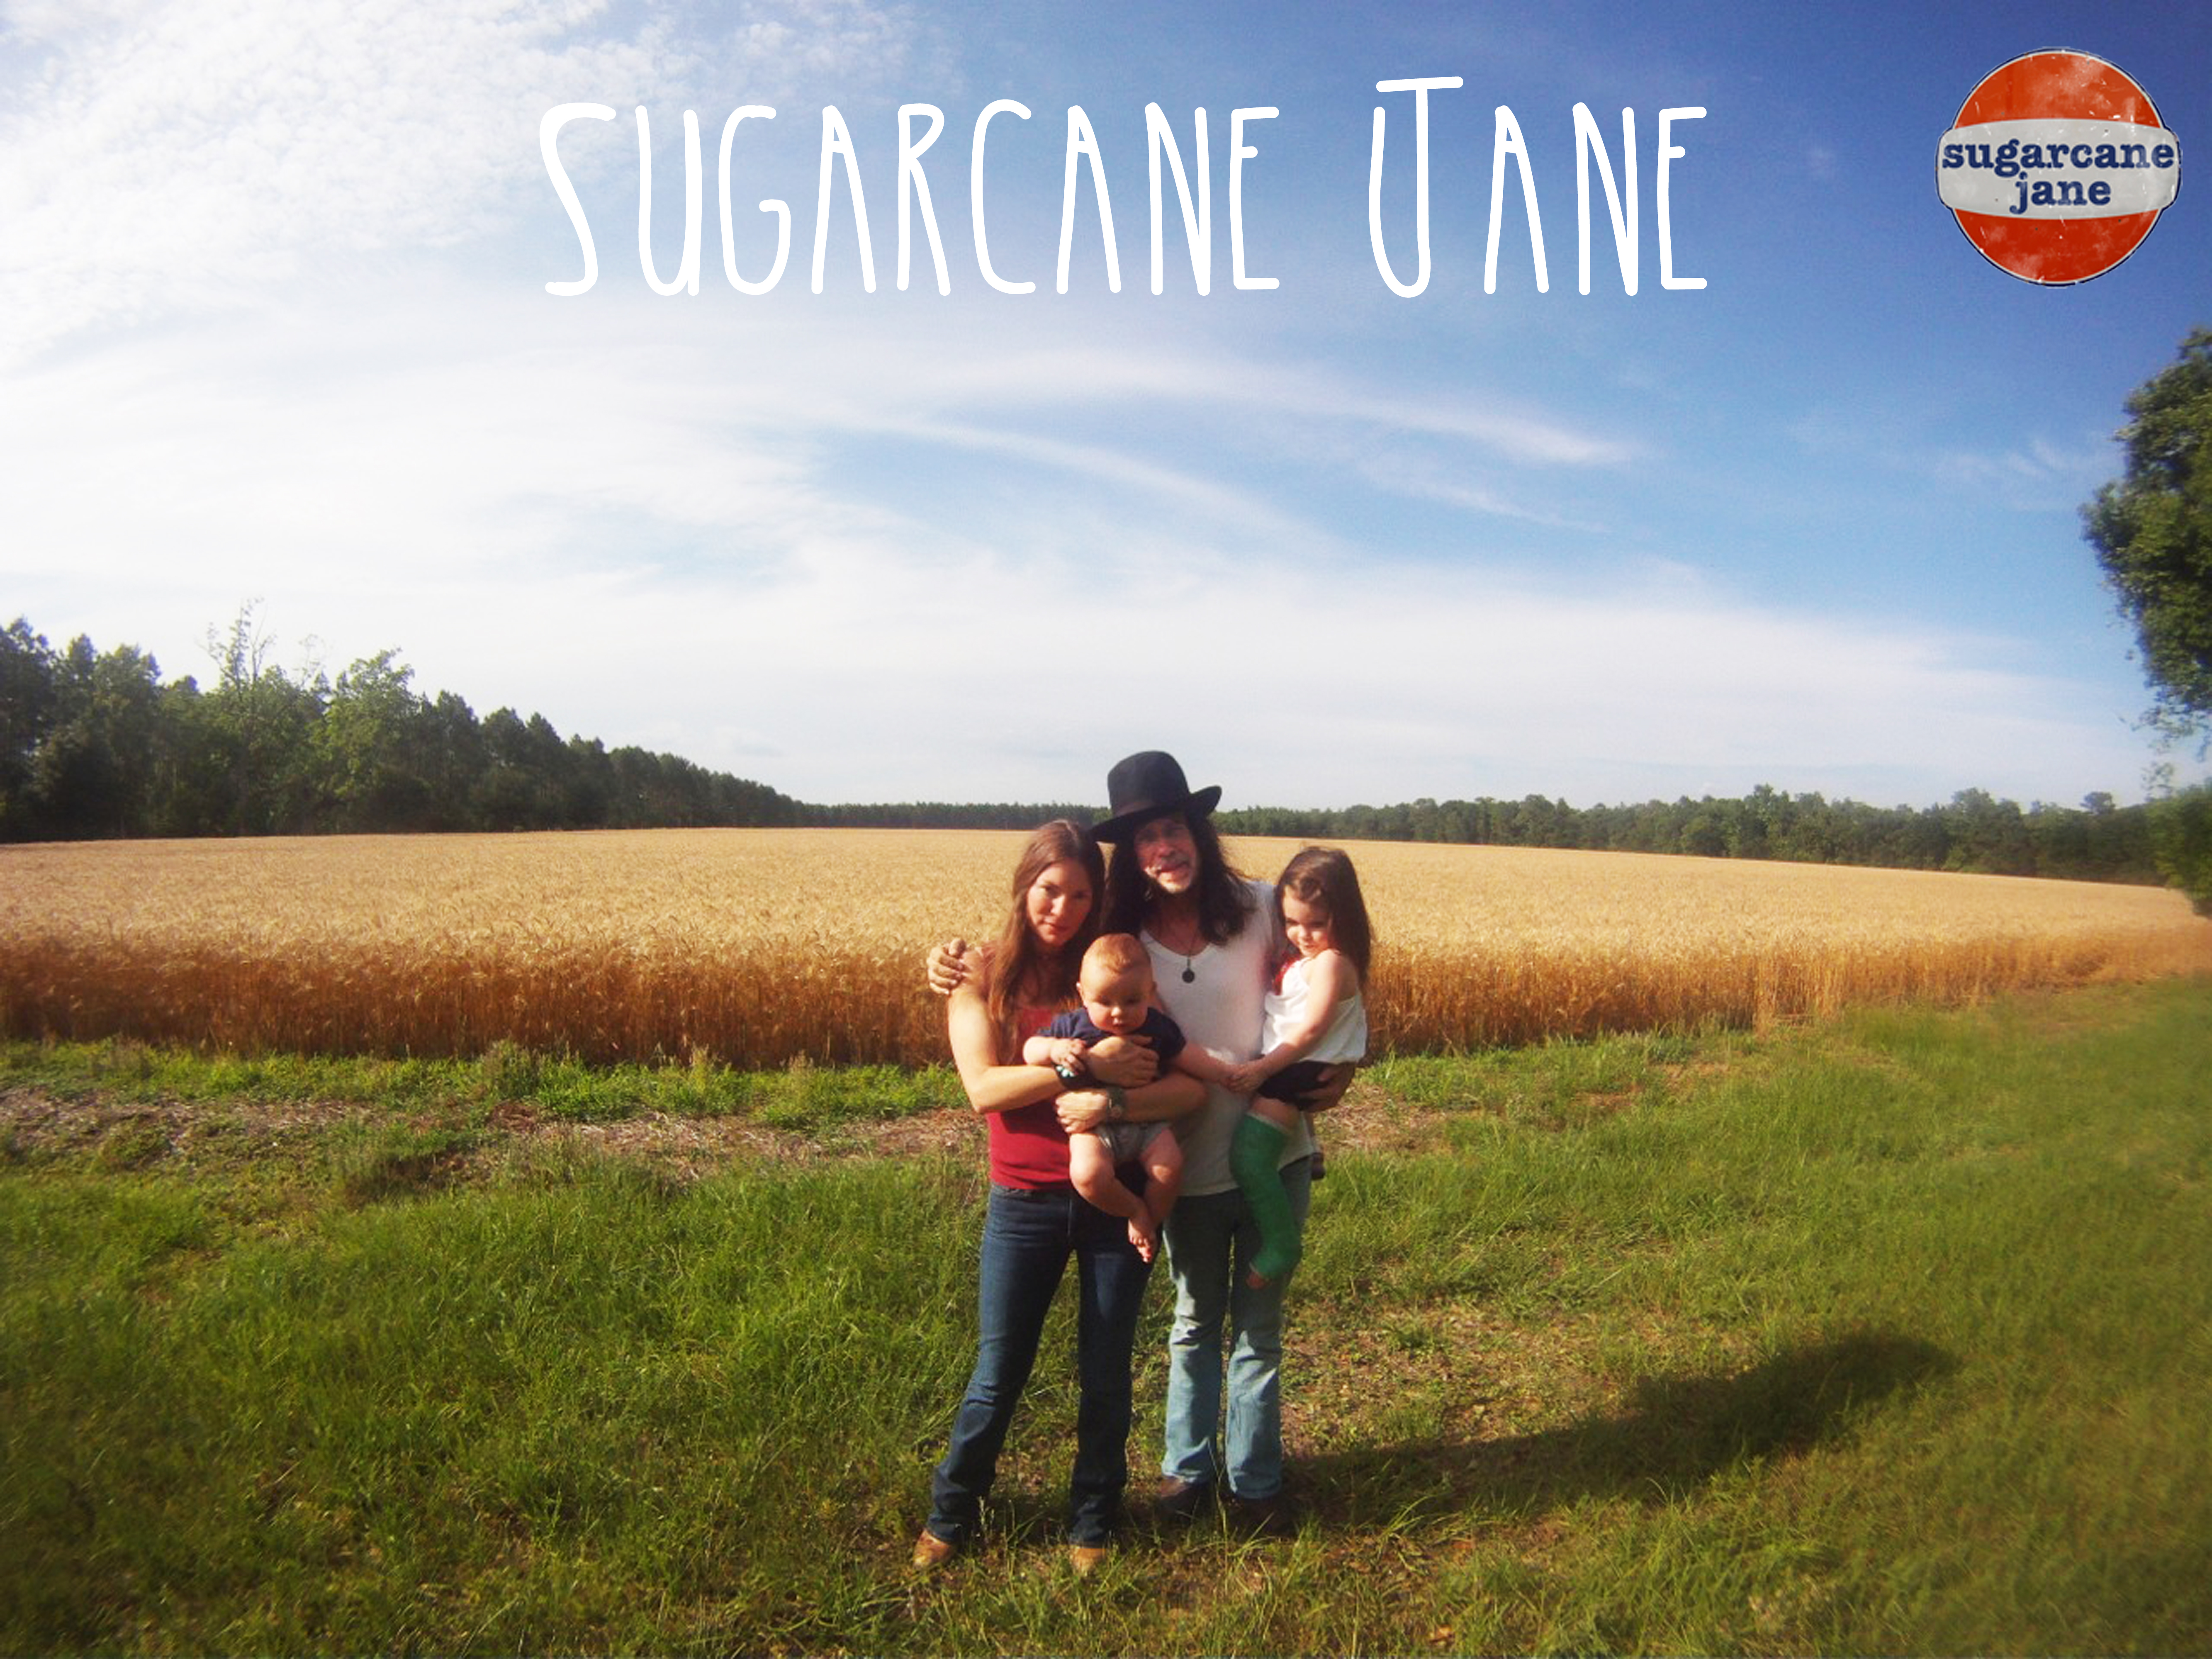 Jane Sugarcane 26